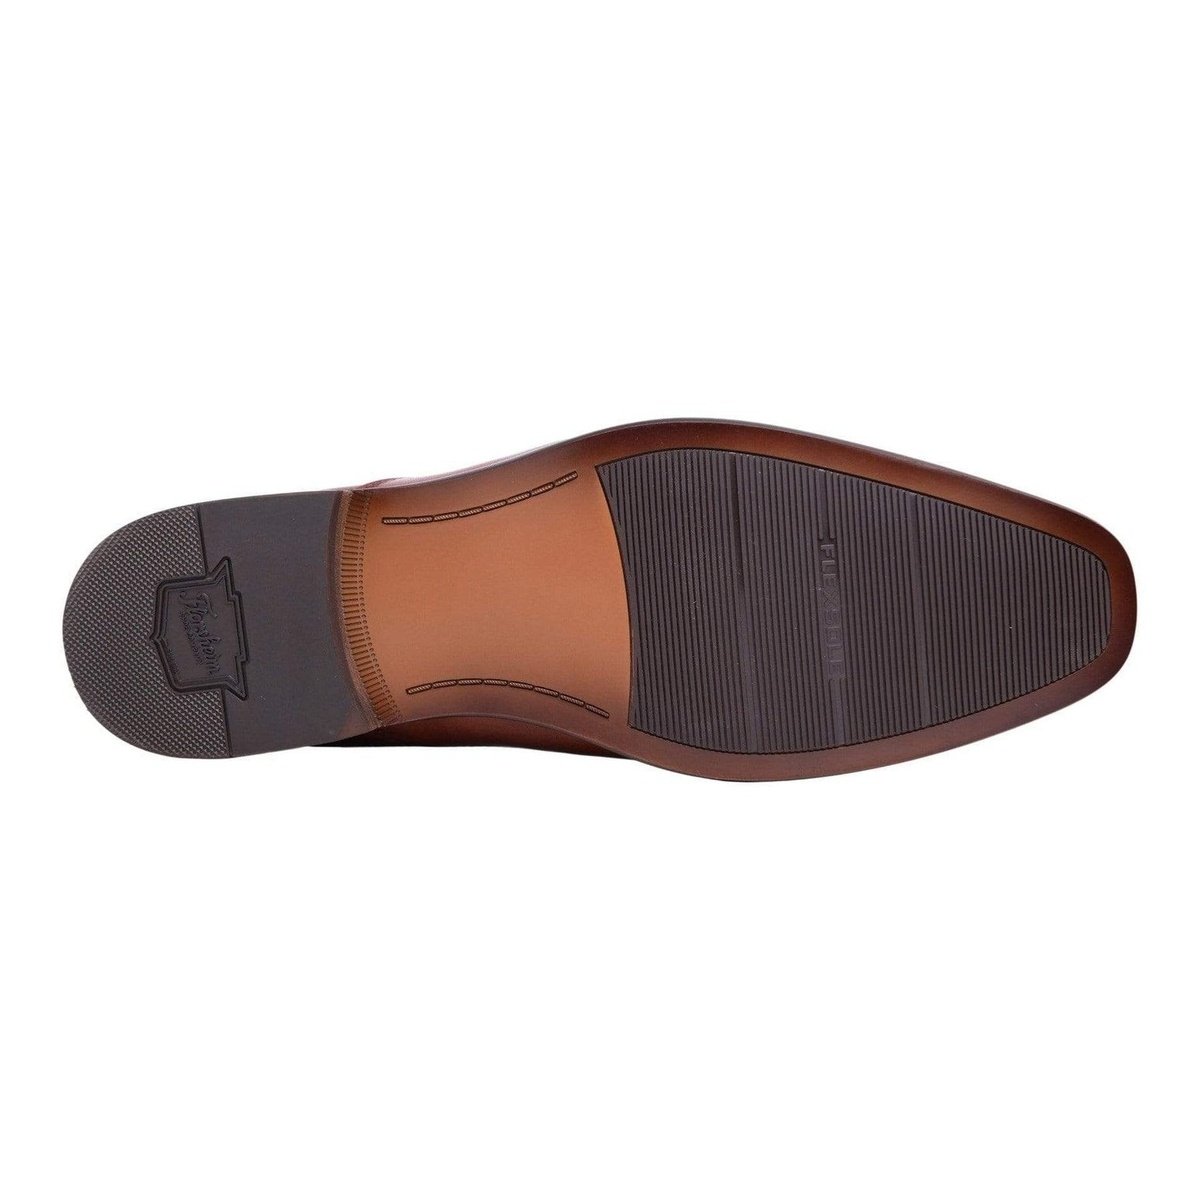 Florsheim SHOES Florsheim Postino Cognac Brown Slip On Leather Dress Shoes